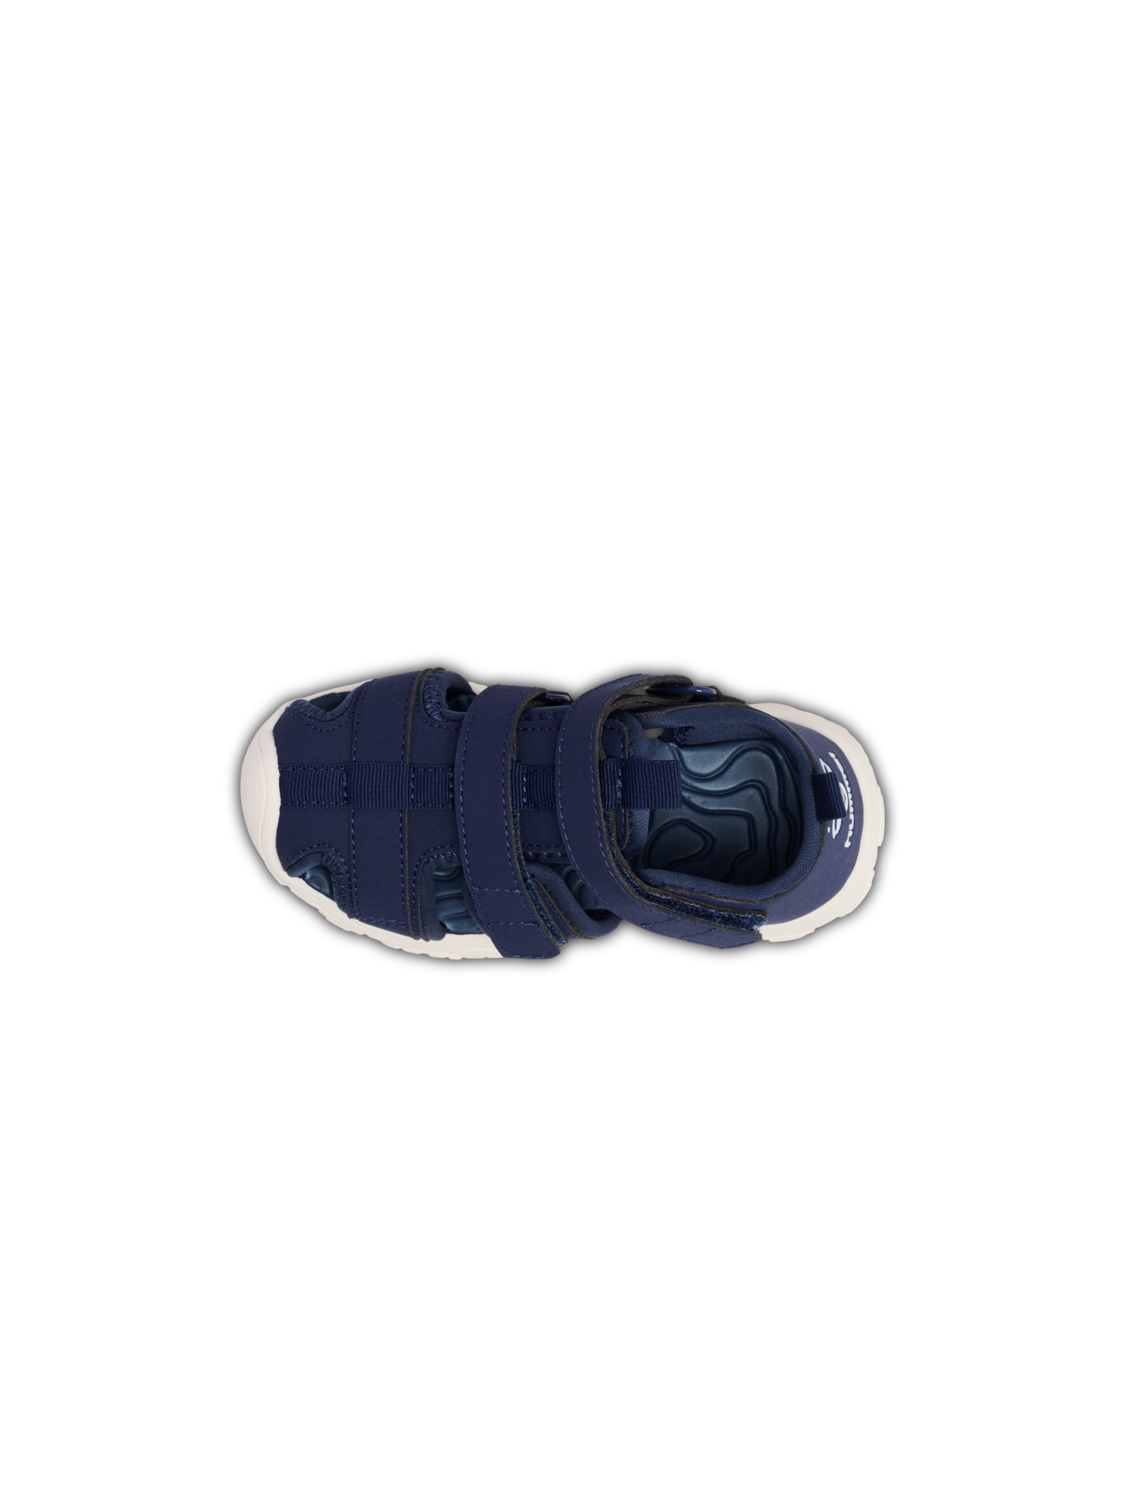 Sandal Velcro Infant Navy Peony